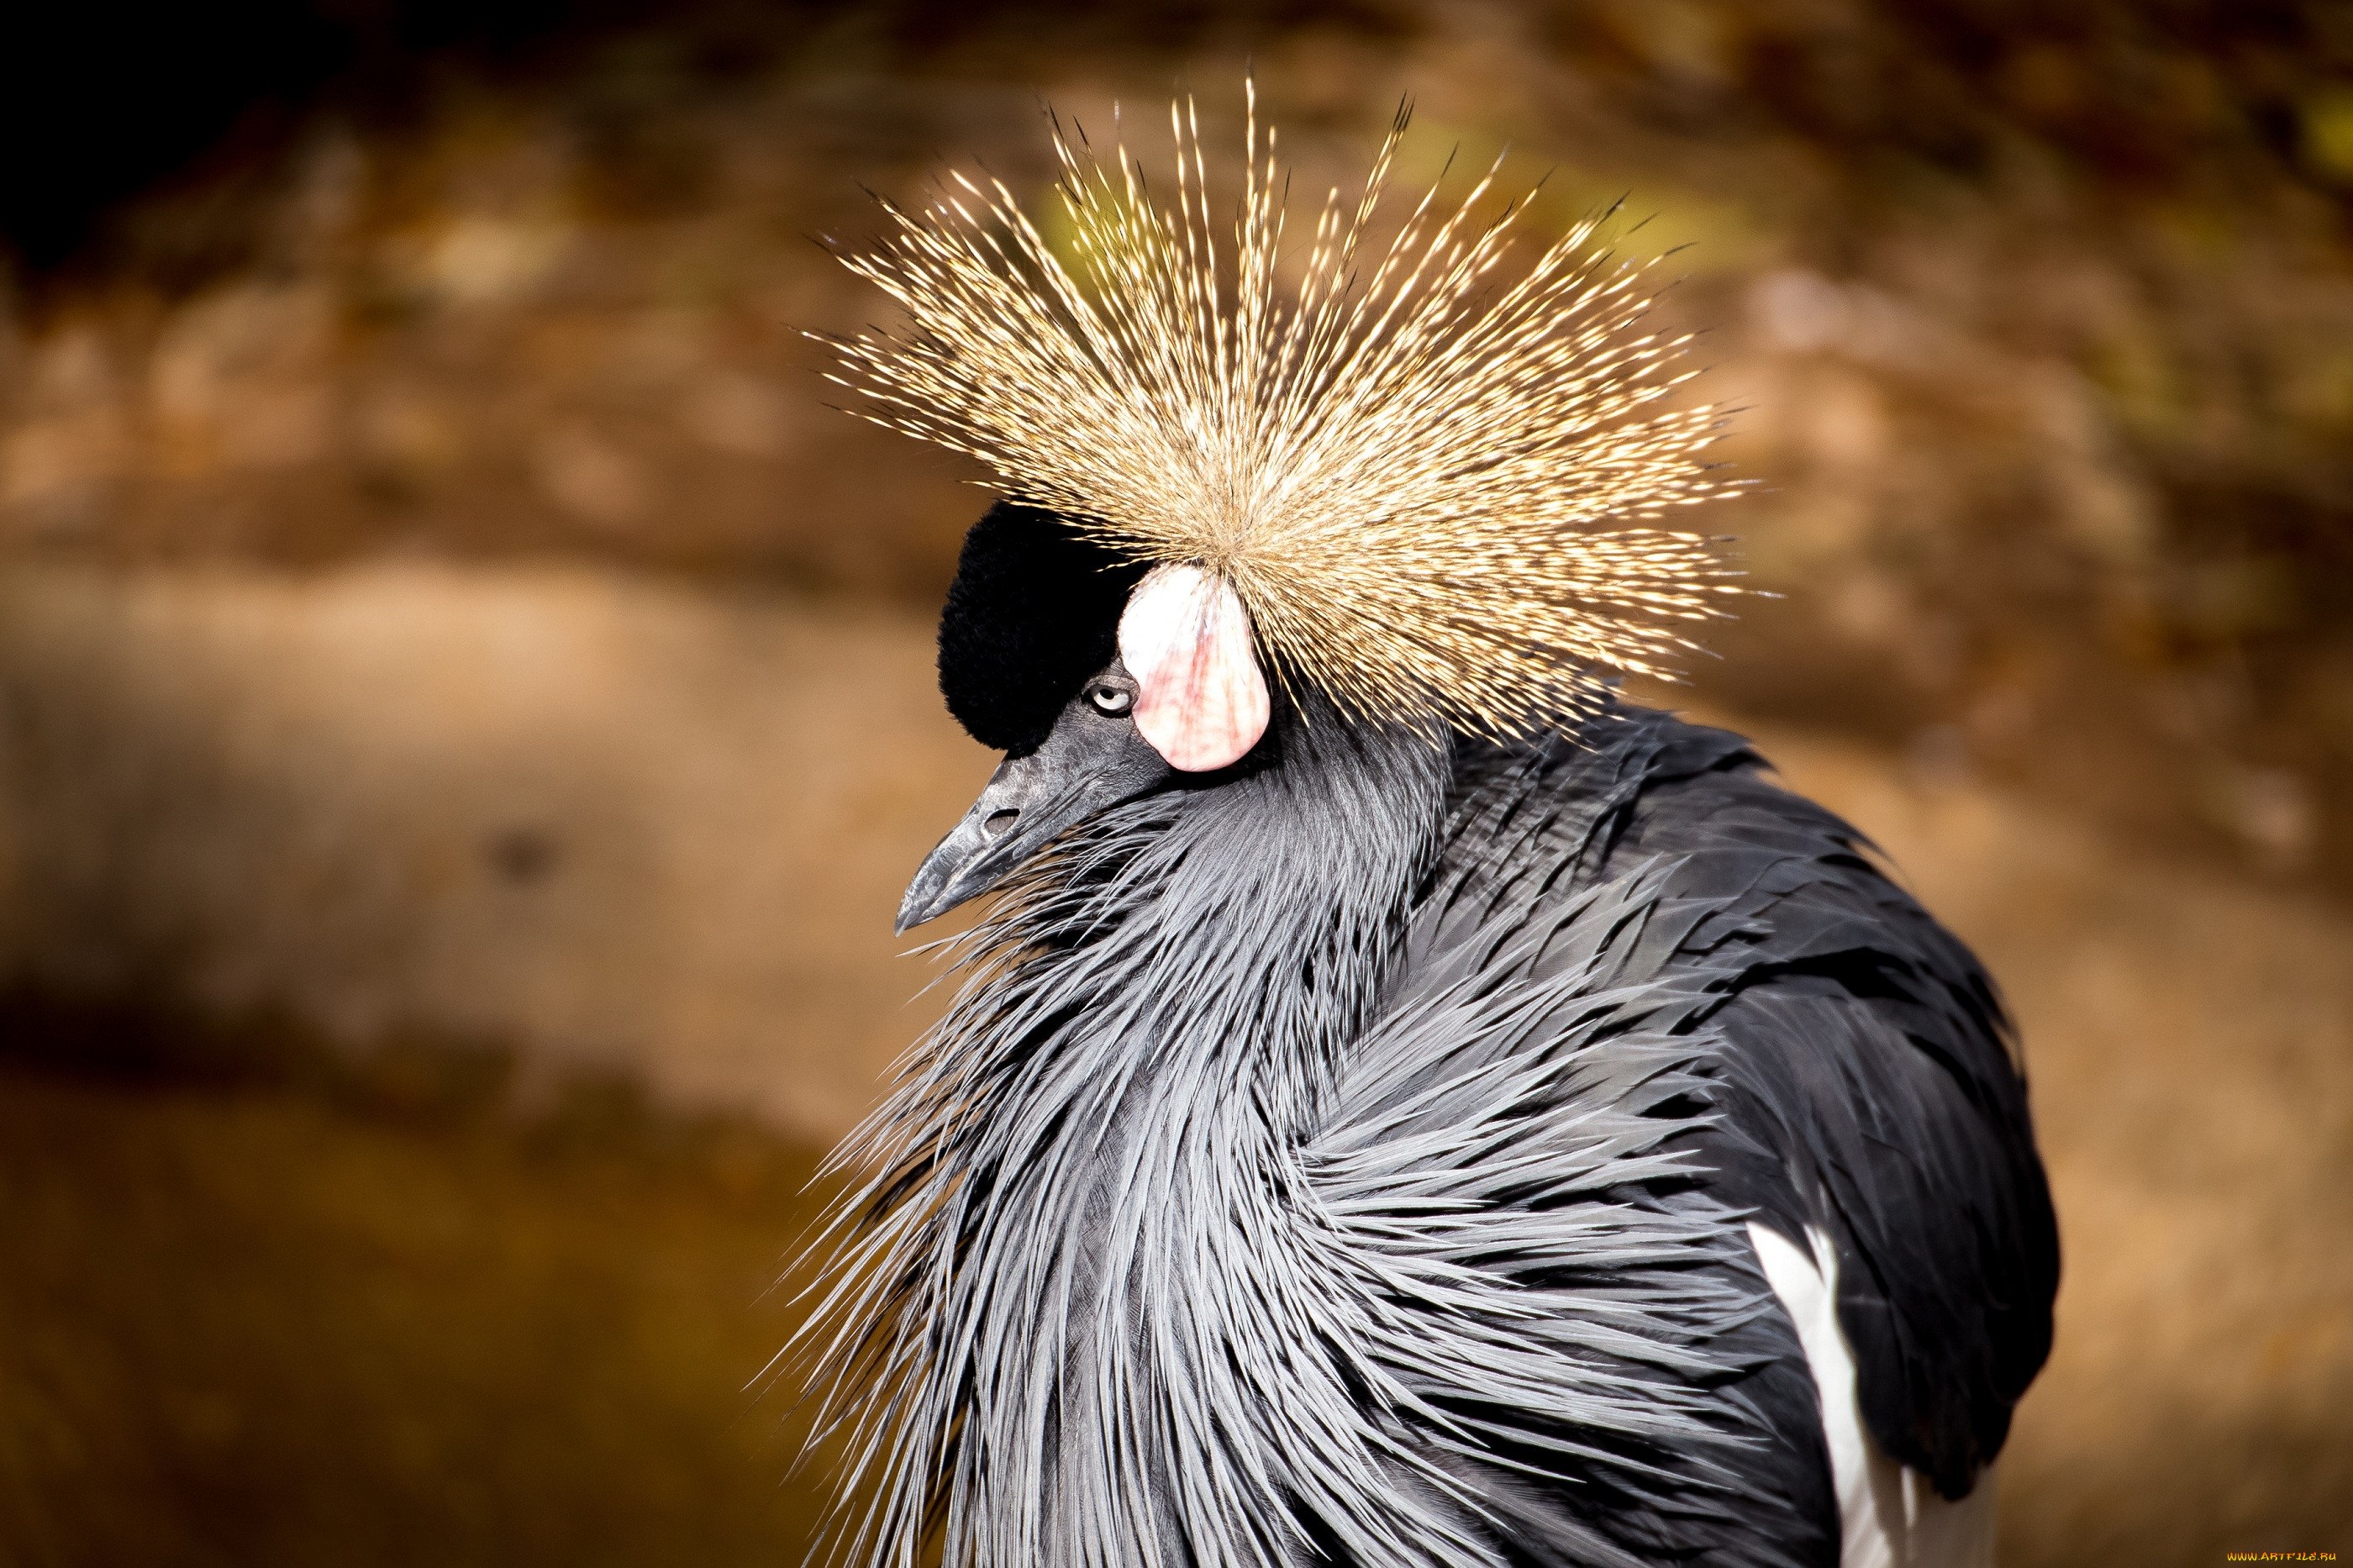 птички с хохолком на голове фото серые